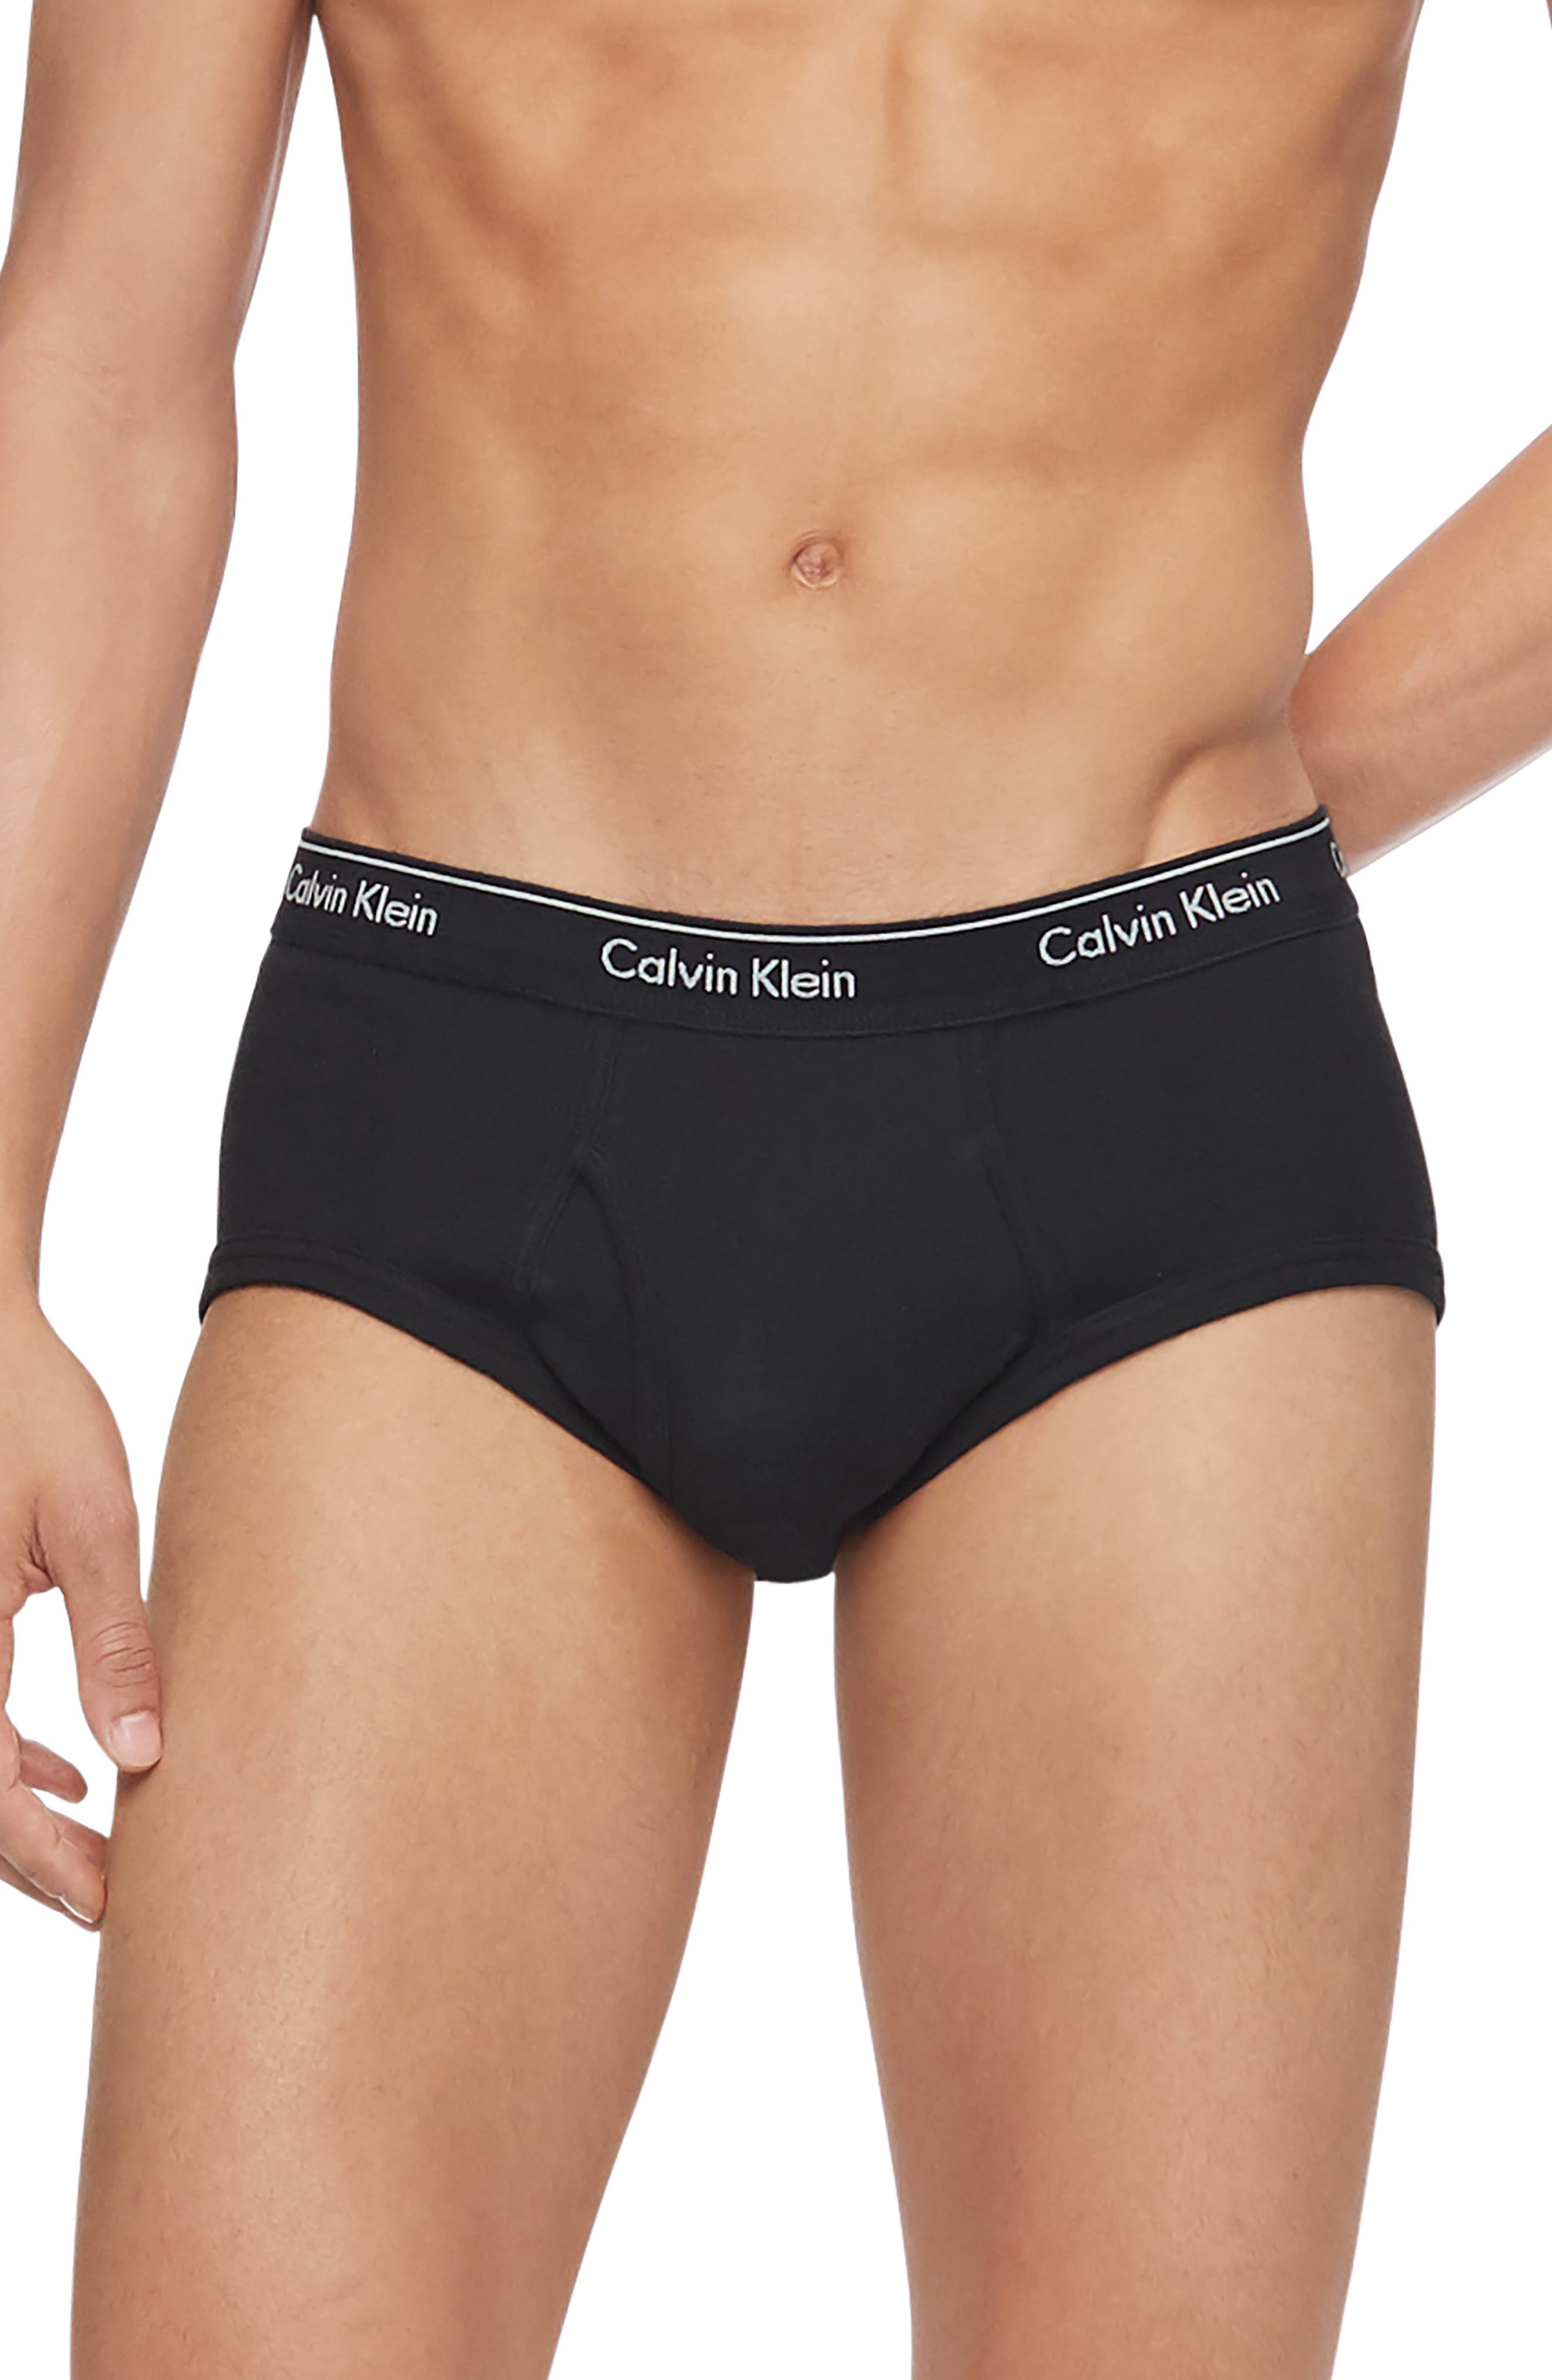 UPC 790812522769 product image for Men's Big & Tall Calvin Klein 3-Pack Cotton Briefs, Size 3XB - Black | upcitemdb.com